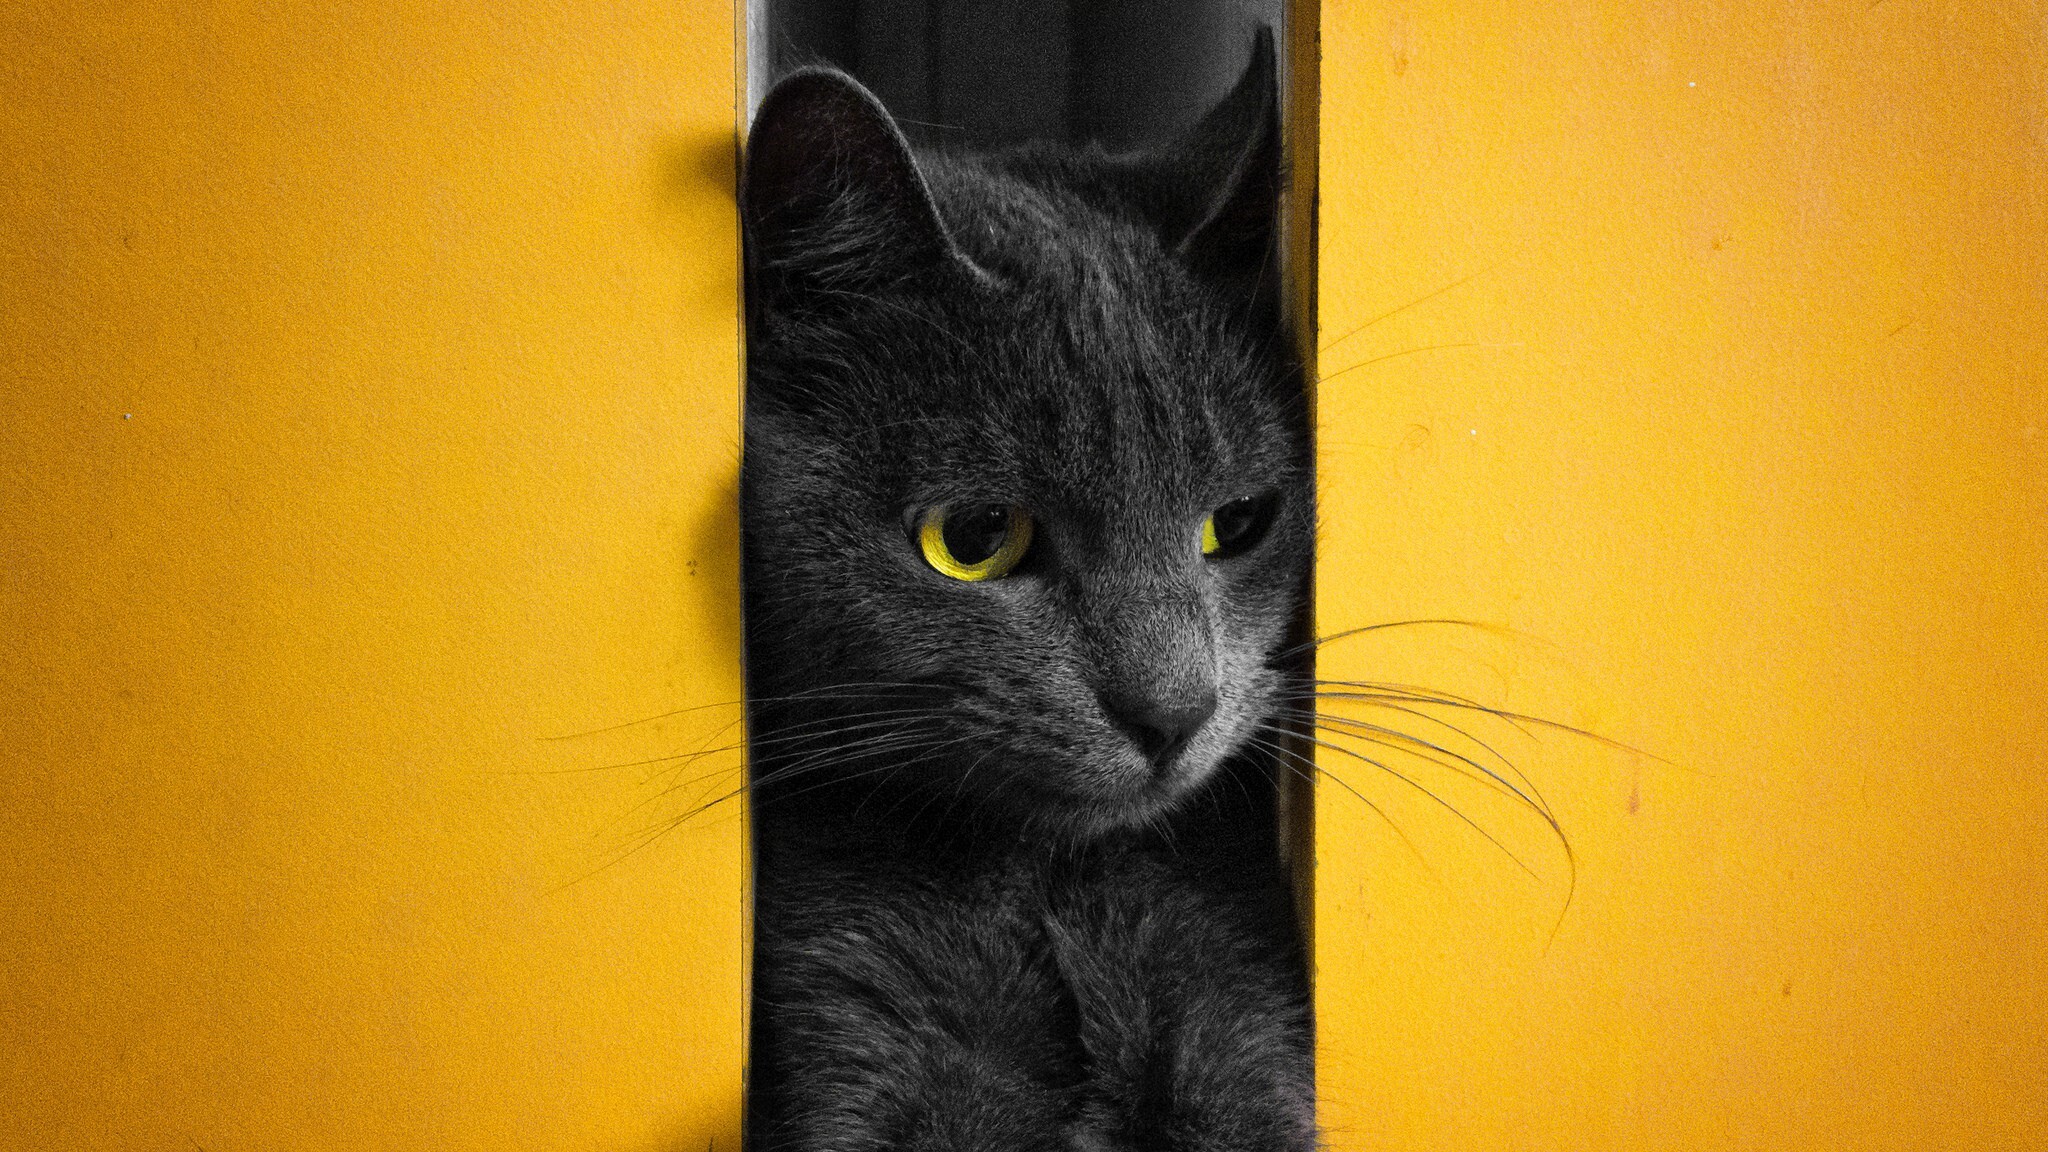 Image: Cat, black, eyes, mustache, between, yellow wall, gap